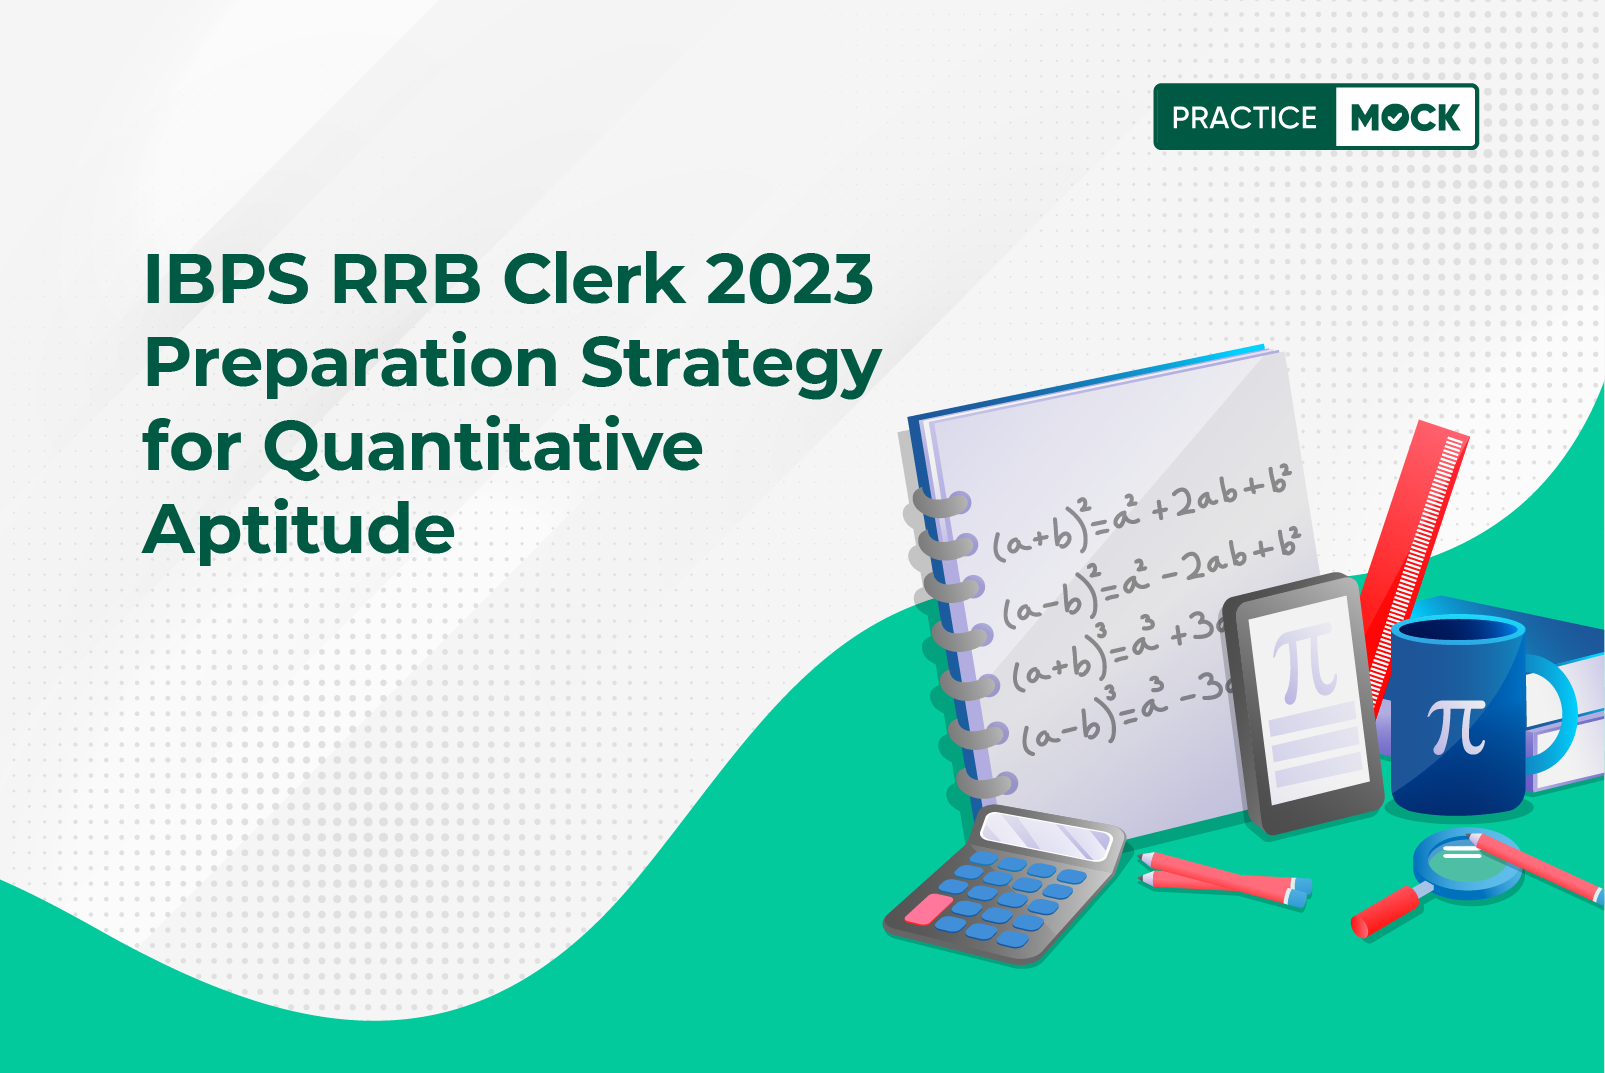 IBPS RRB Clerk 2023 Preparation Strategy For Quantitative Aptitude PracticeMock